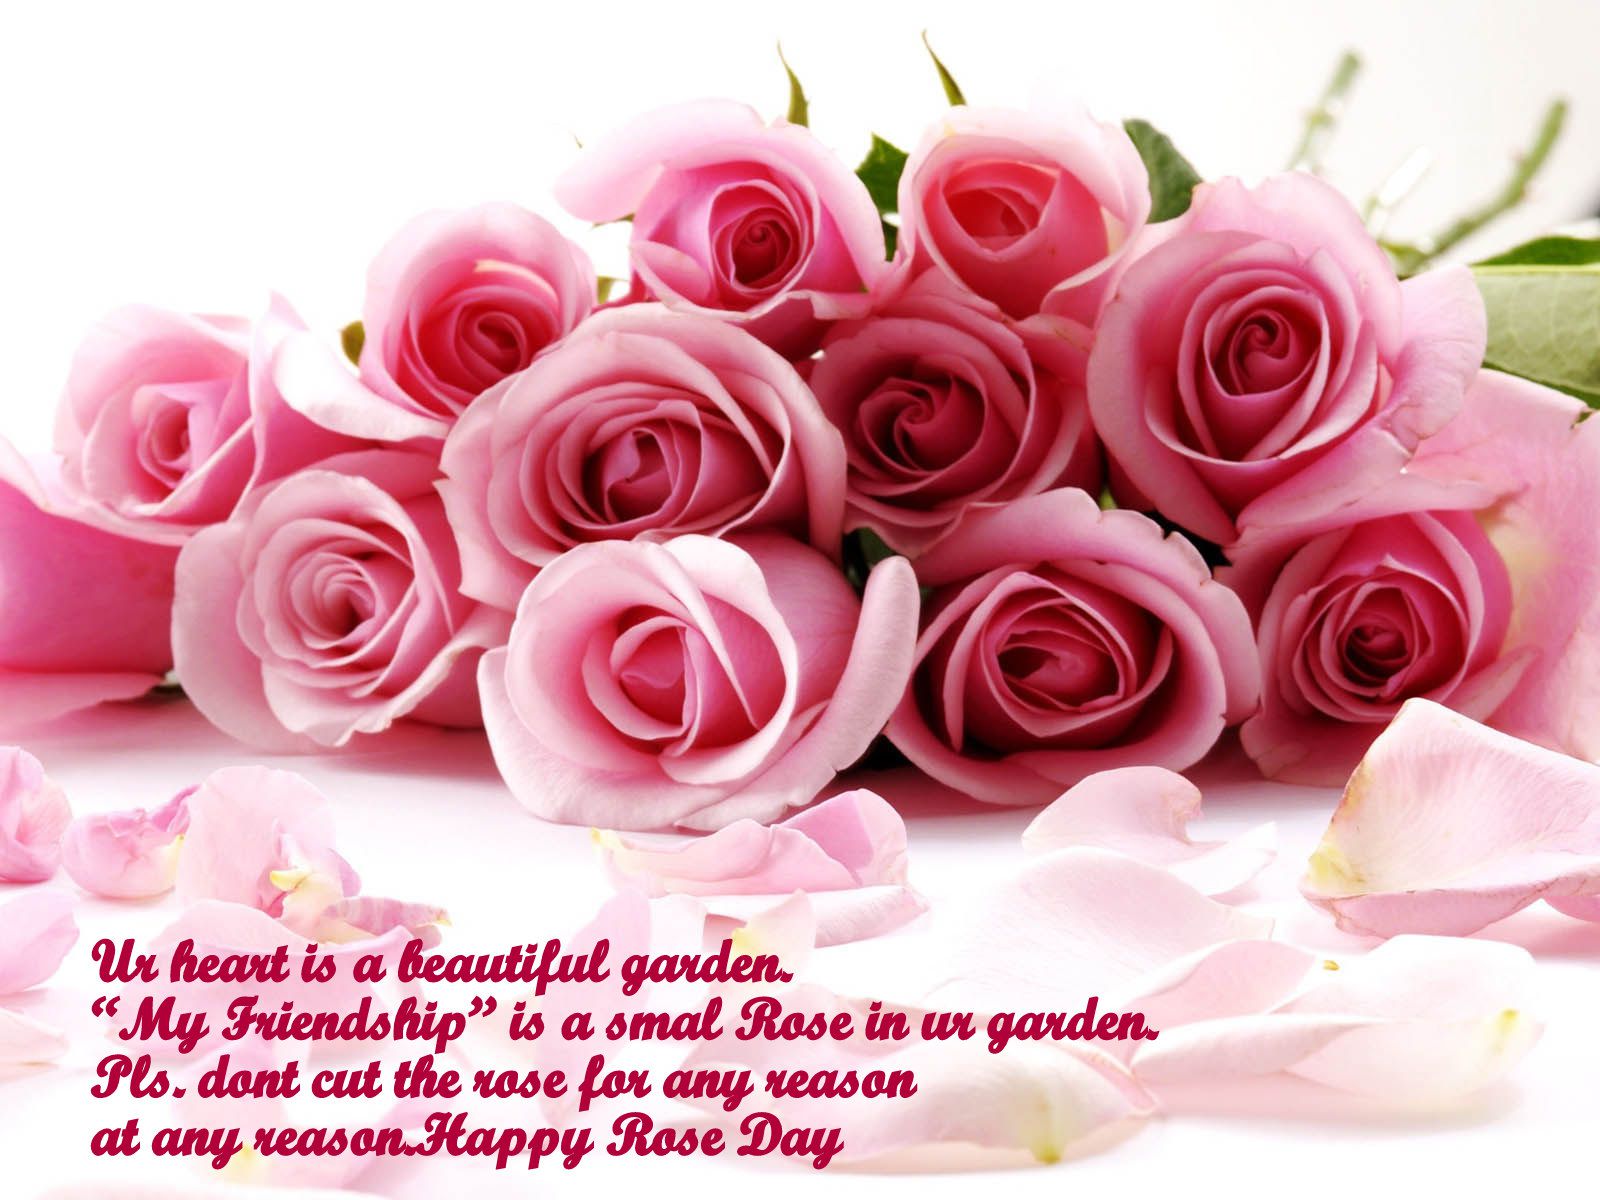 gulab fondo de pantalla completo,rosas de jardín,rosado,flor,rosa,cortar flores